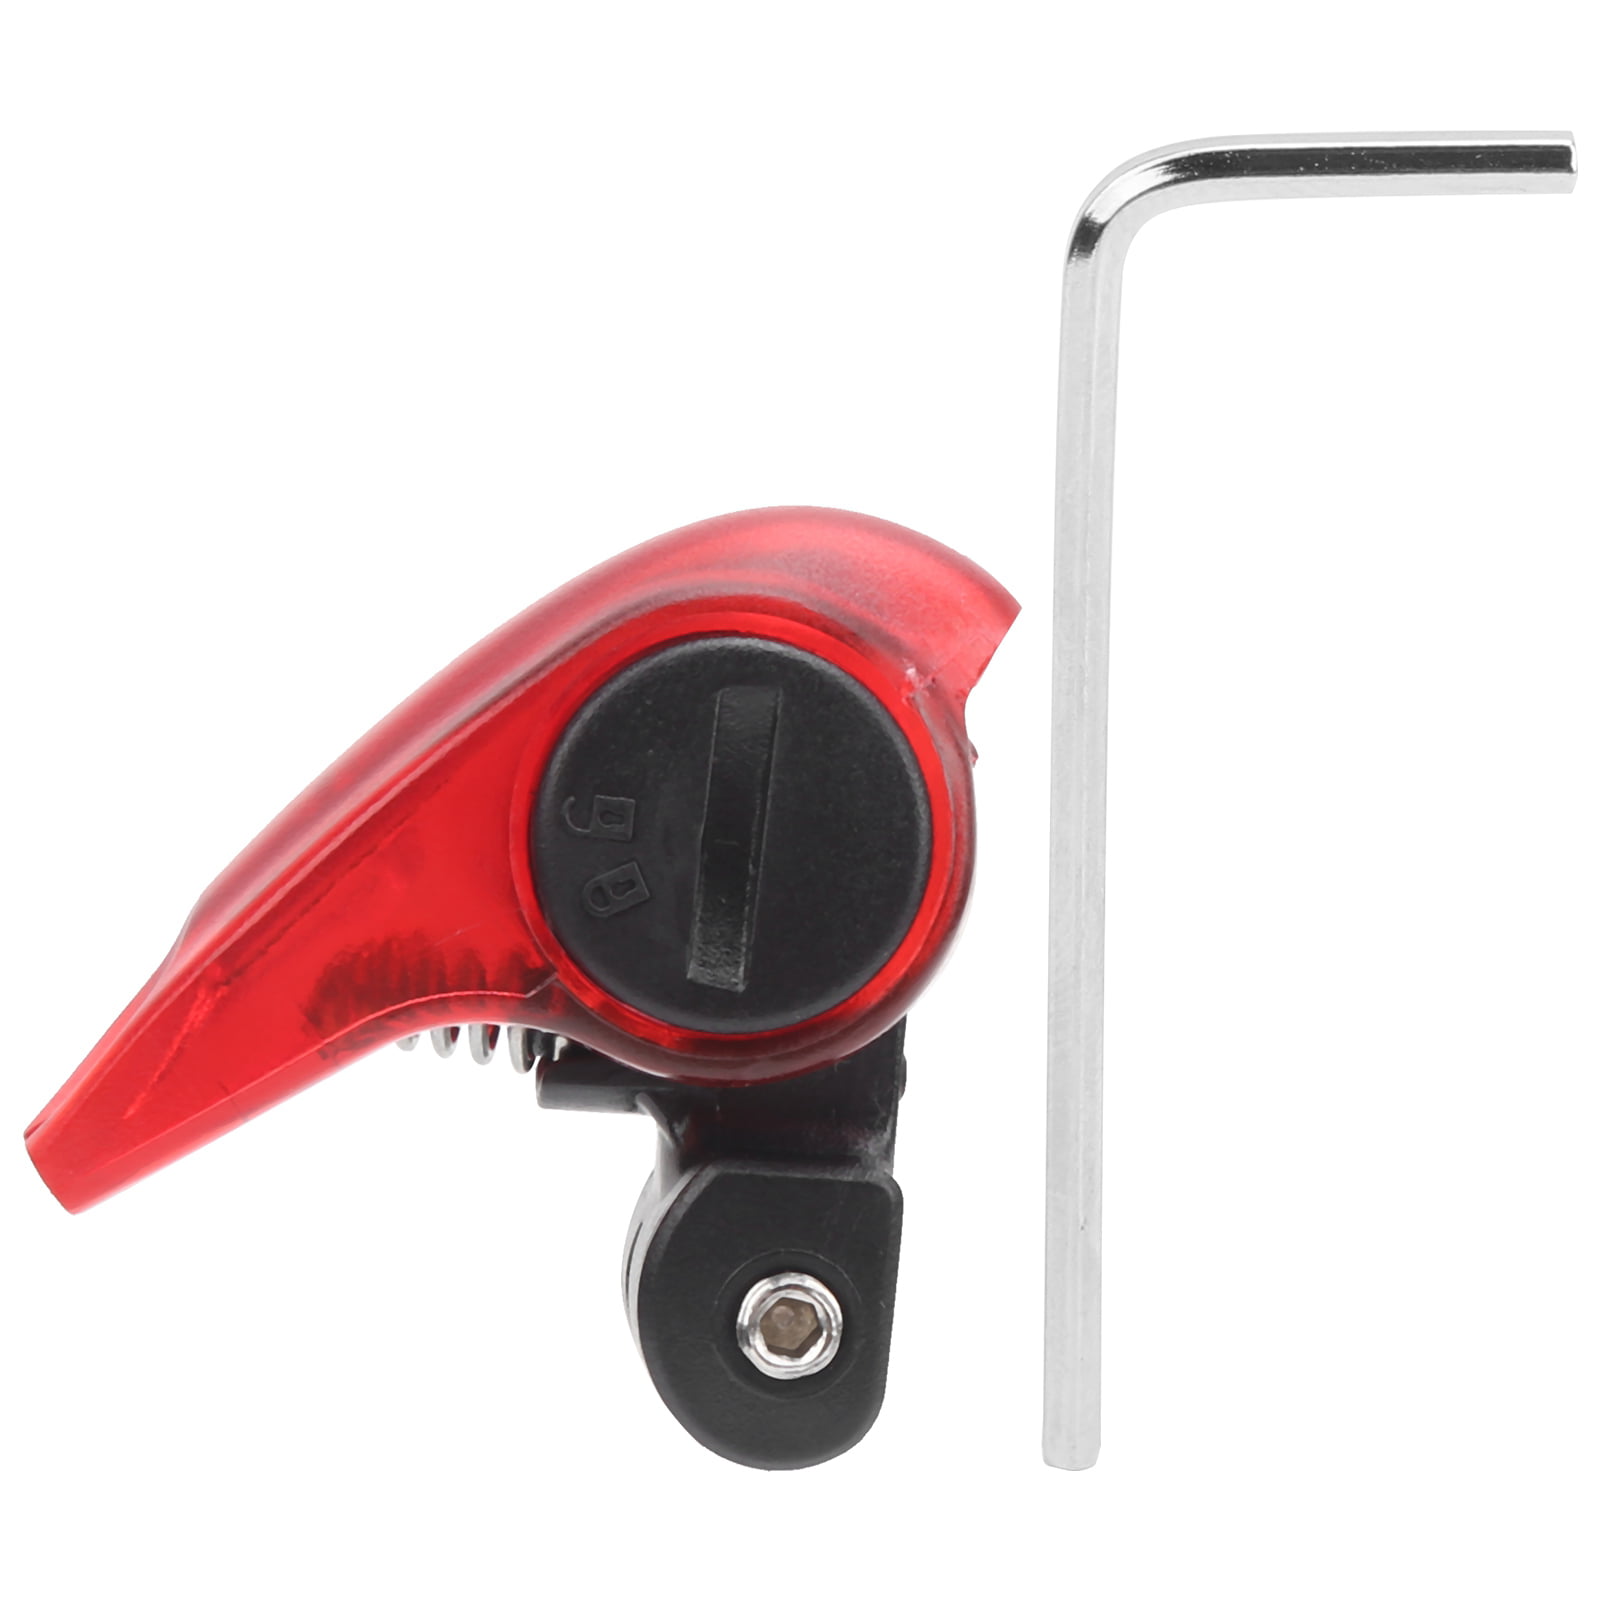 Details about   Mini Bike Brake Lamp Waterproof Bicycle Taillight Warning Rear Light Accs